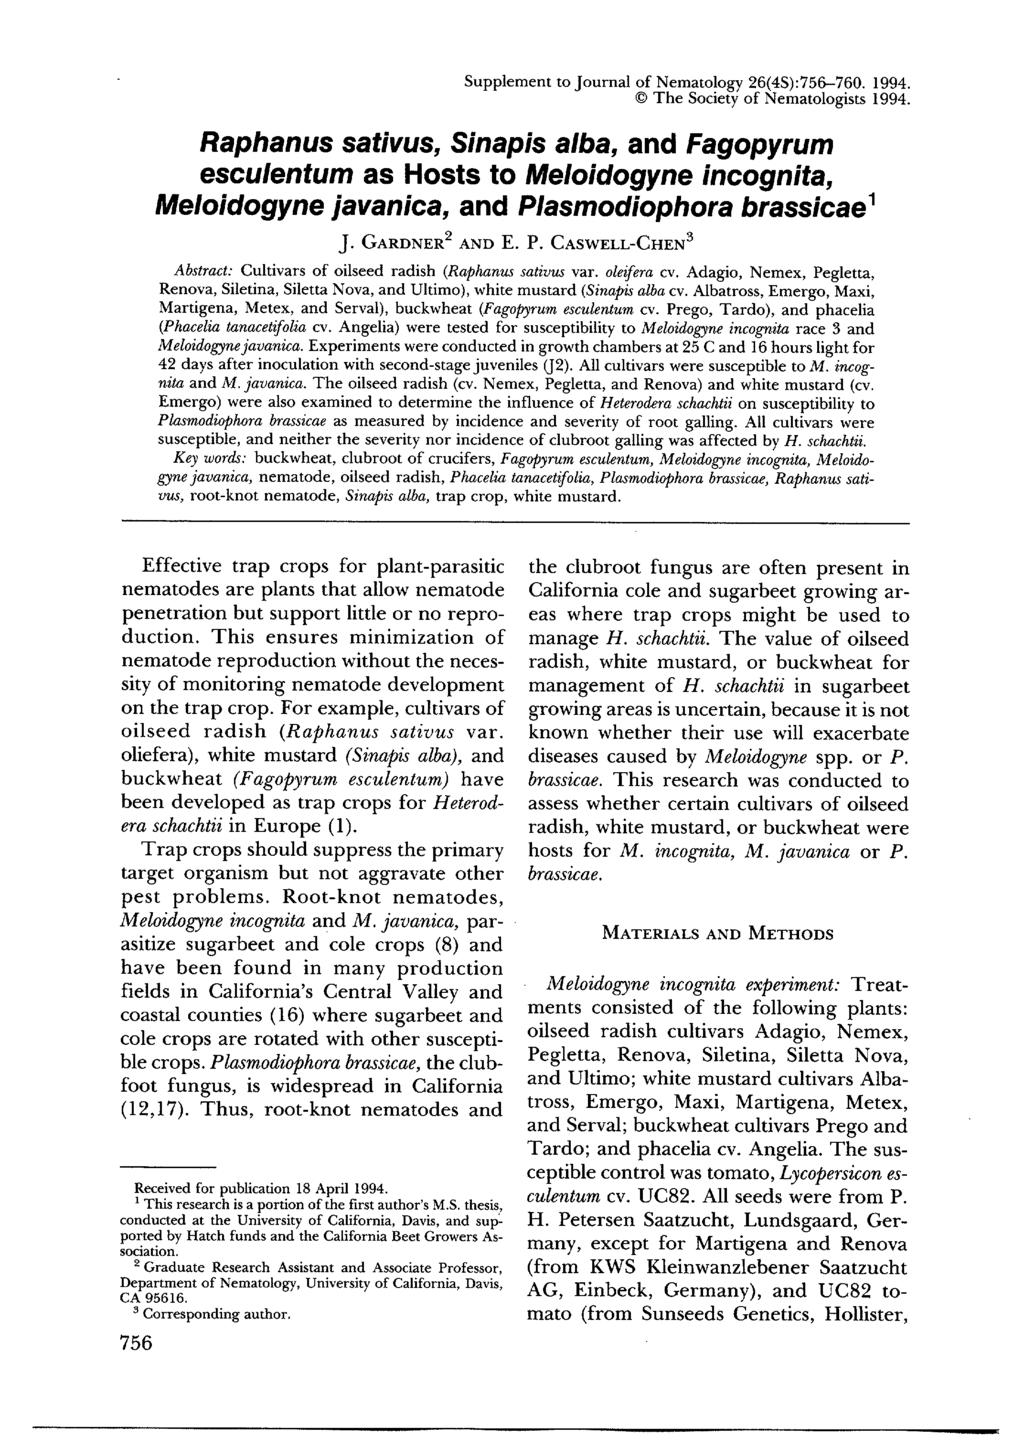 Supplement to Journal of Nematology 26(4S):756-760. 1994. The Society of Nematologists 1994.